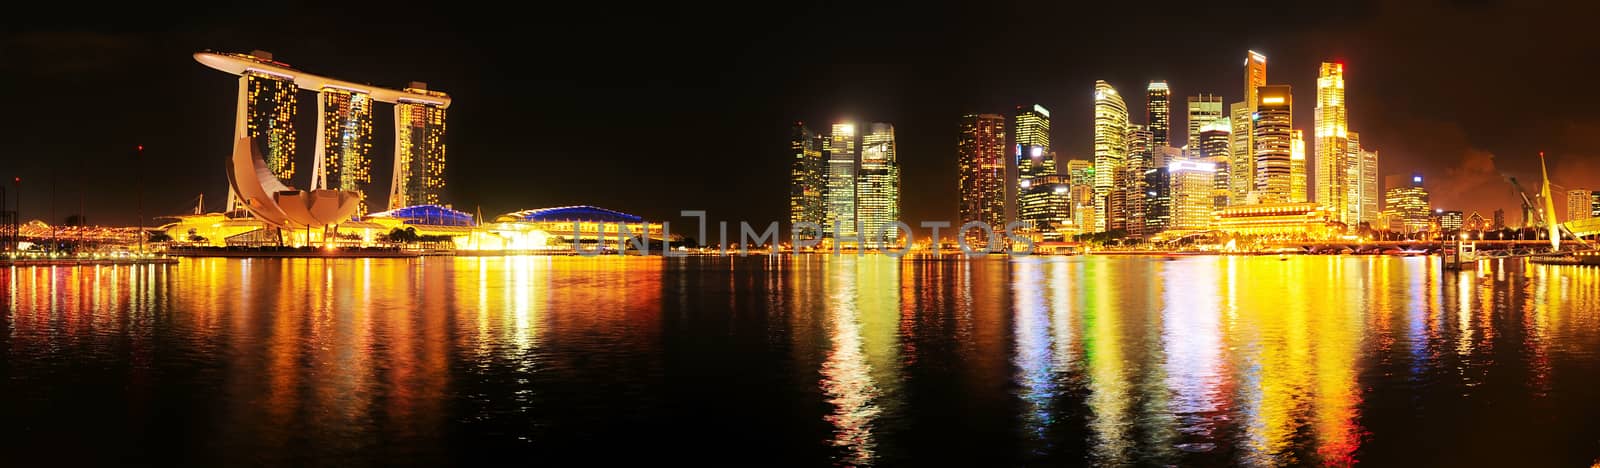 Singapore night skyline by joyfull